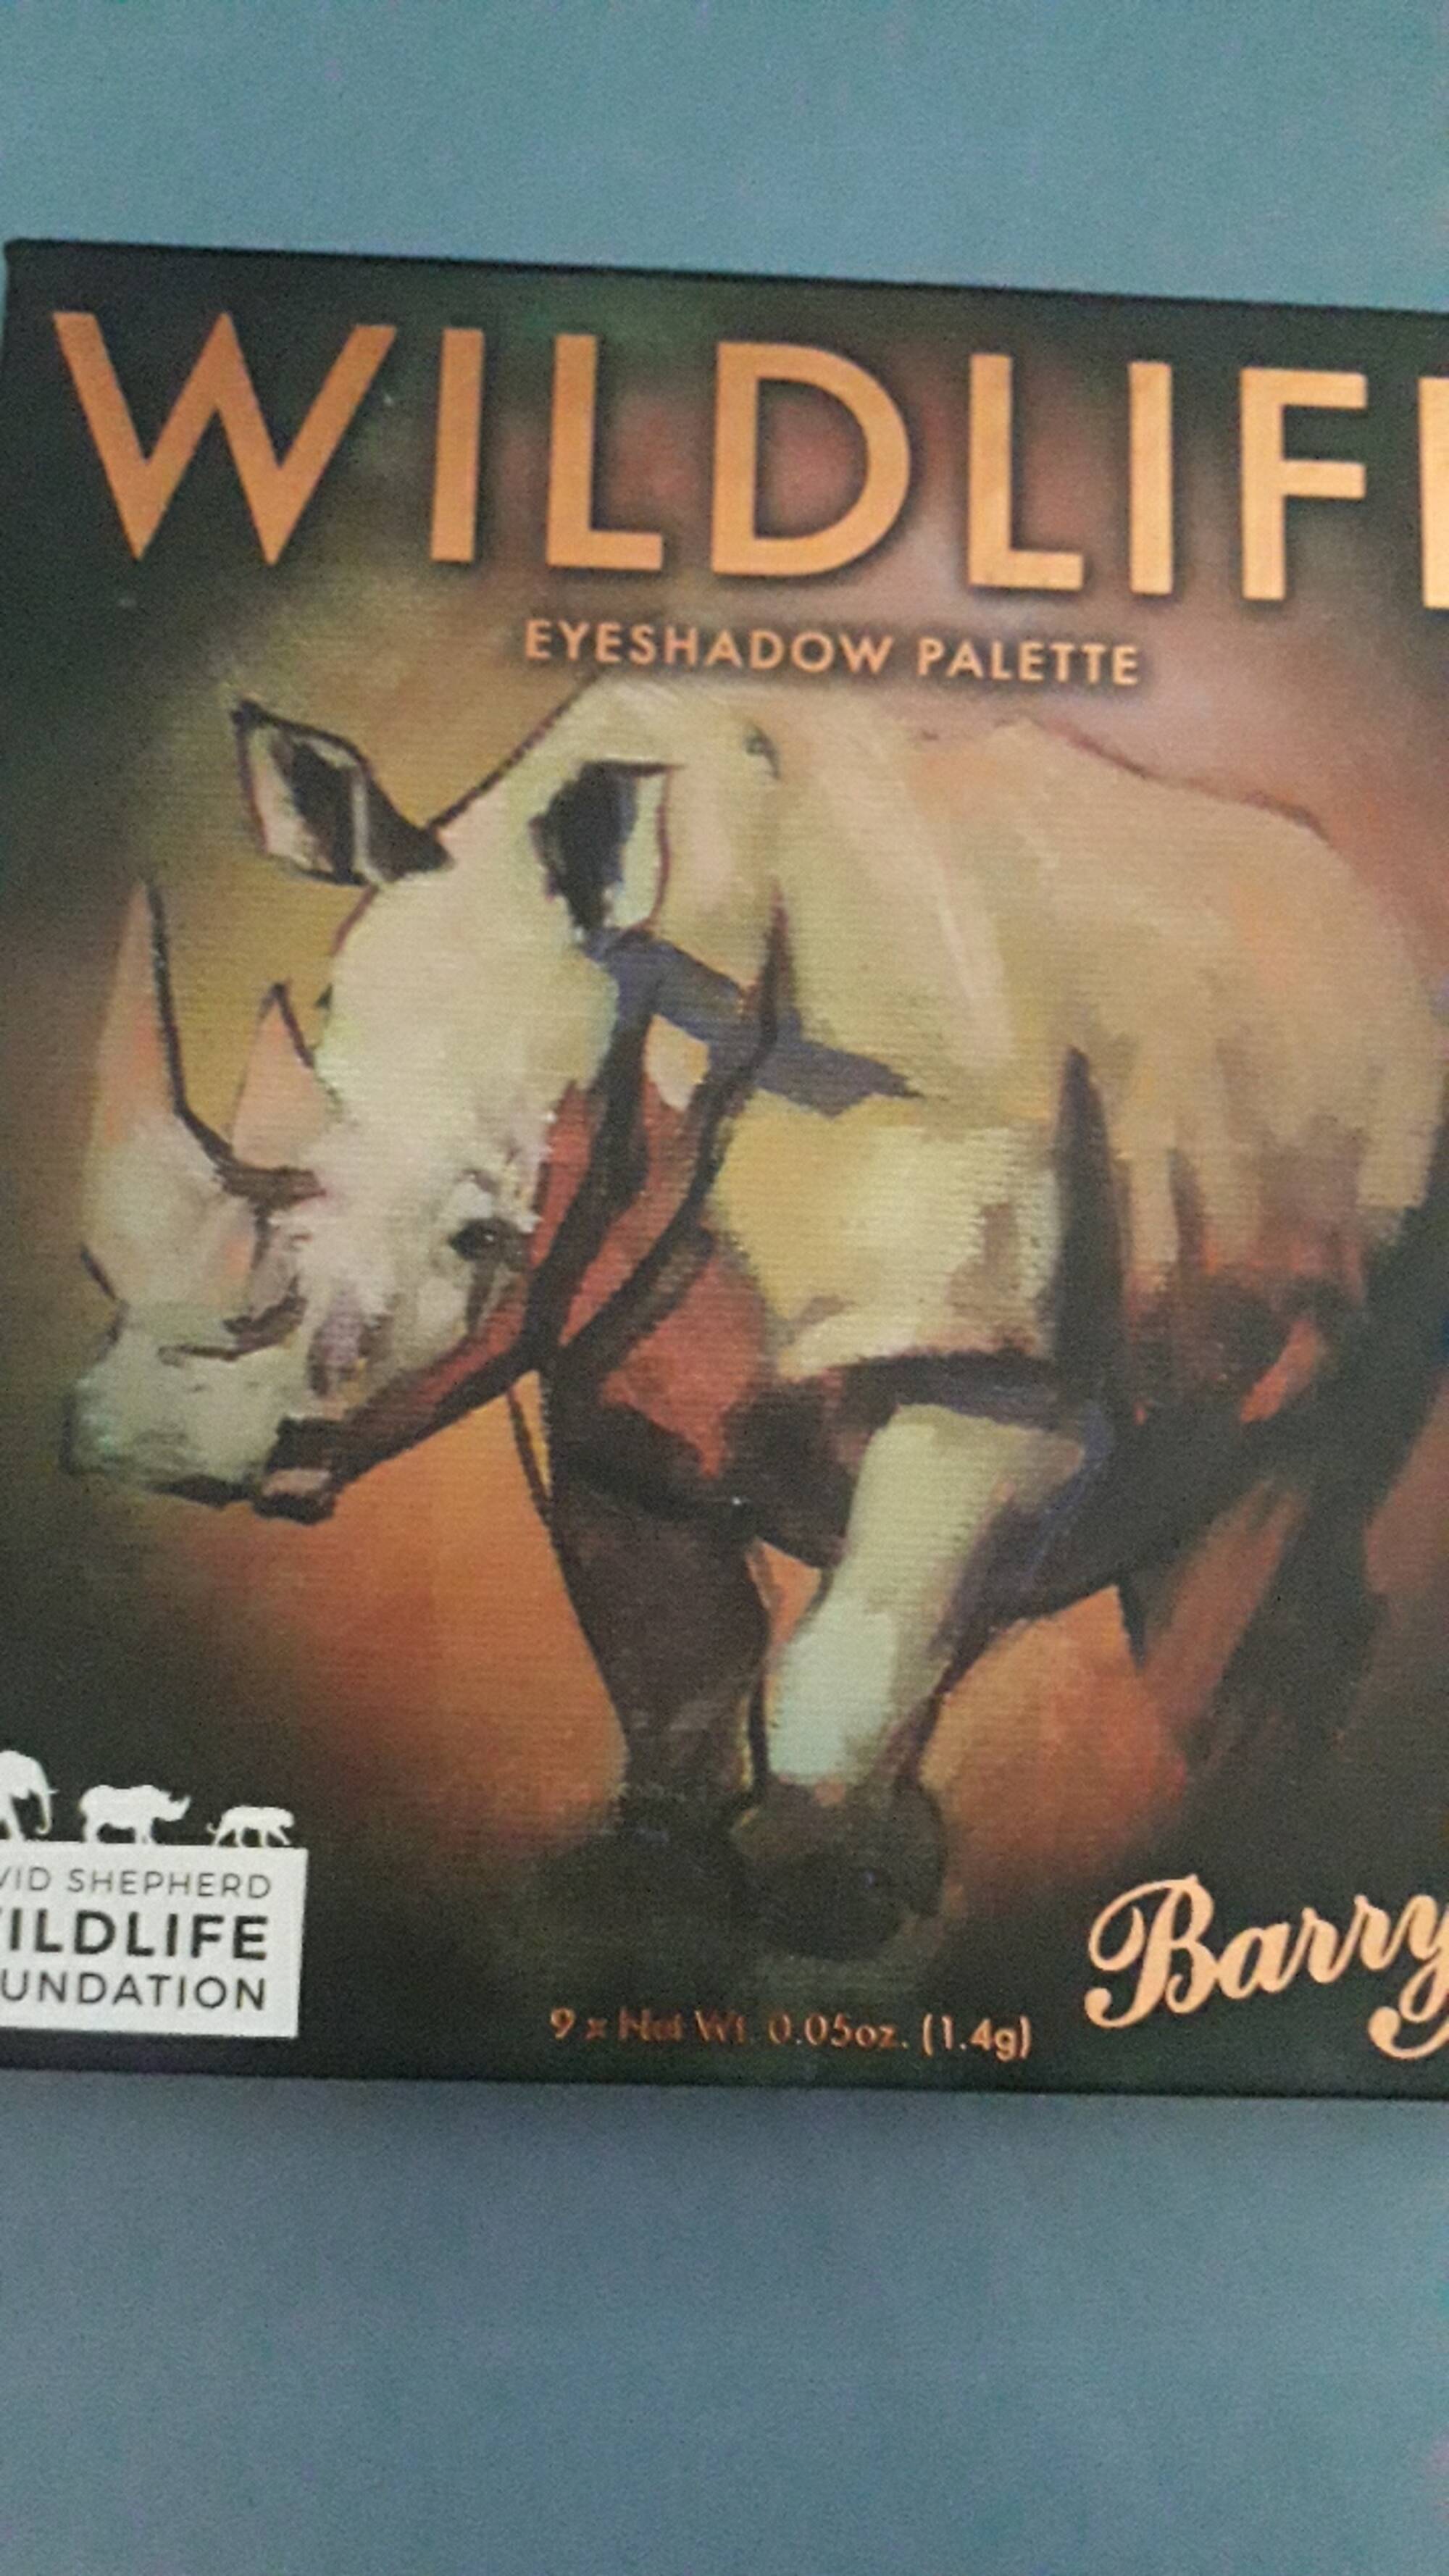 BARRY M. - Wildlife - Eyeshadow palette